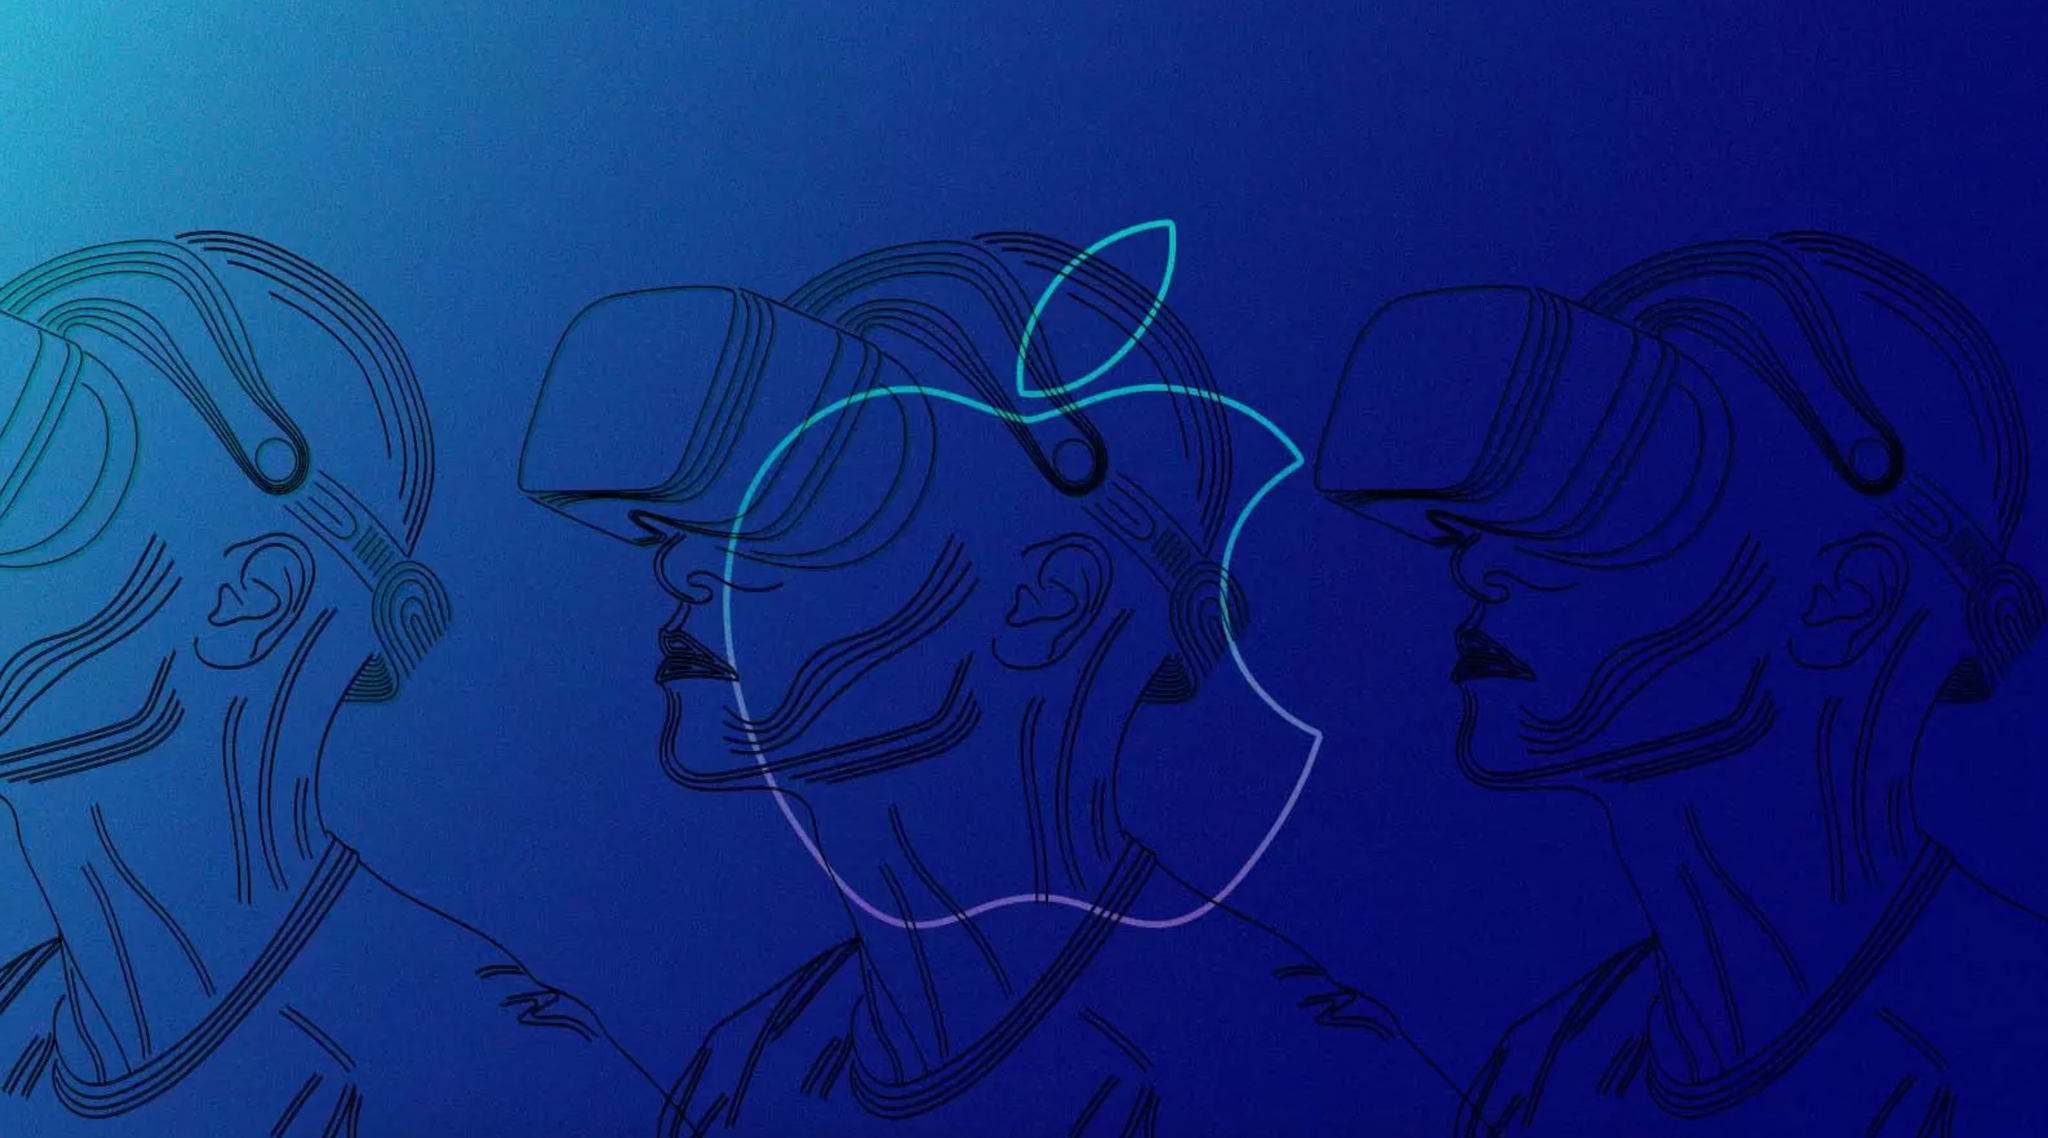 Apple enfrenta desafios legais enquanto transforma o universo tecnológico